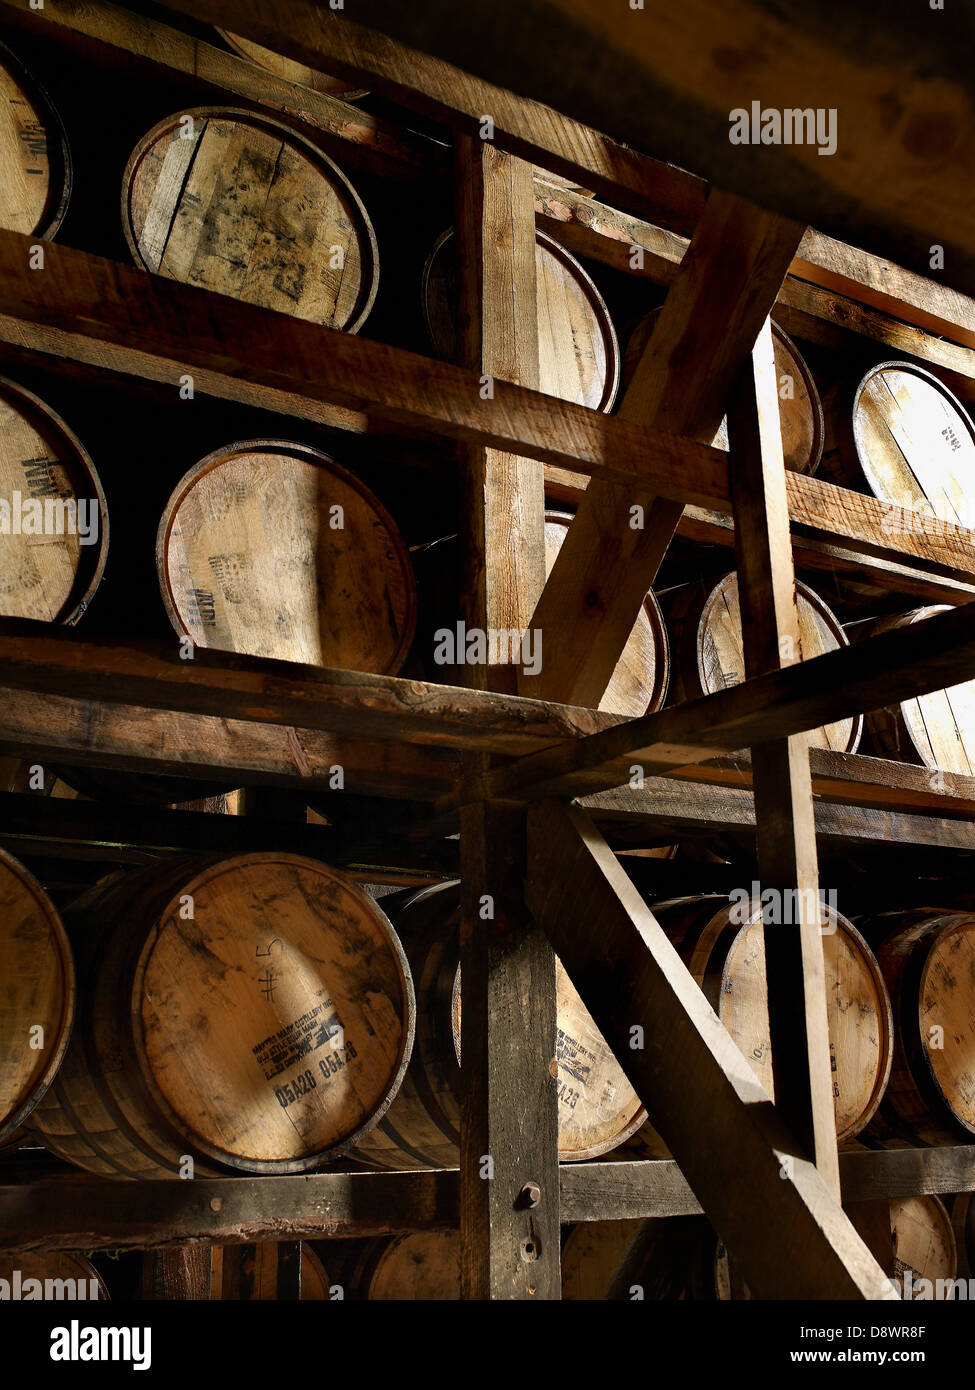 Barrels of Maker's Mark Bourbon Stock Photo